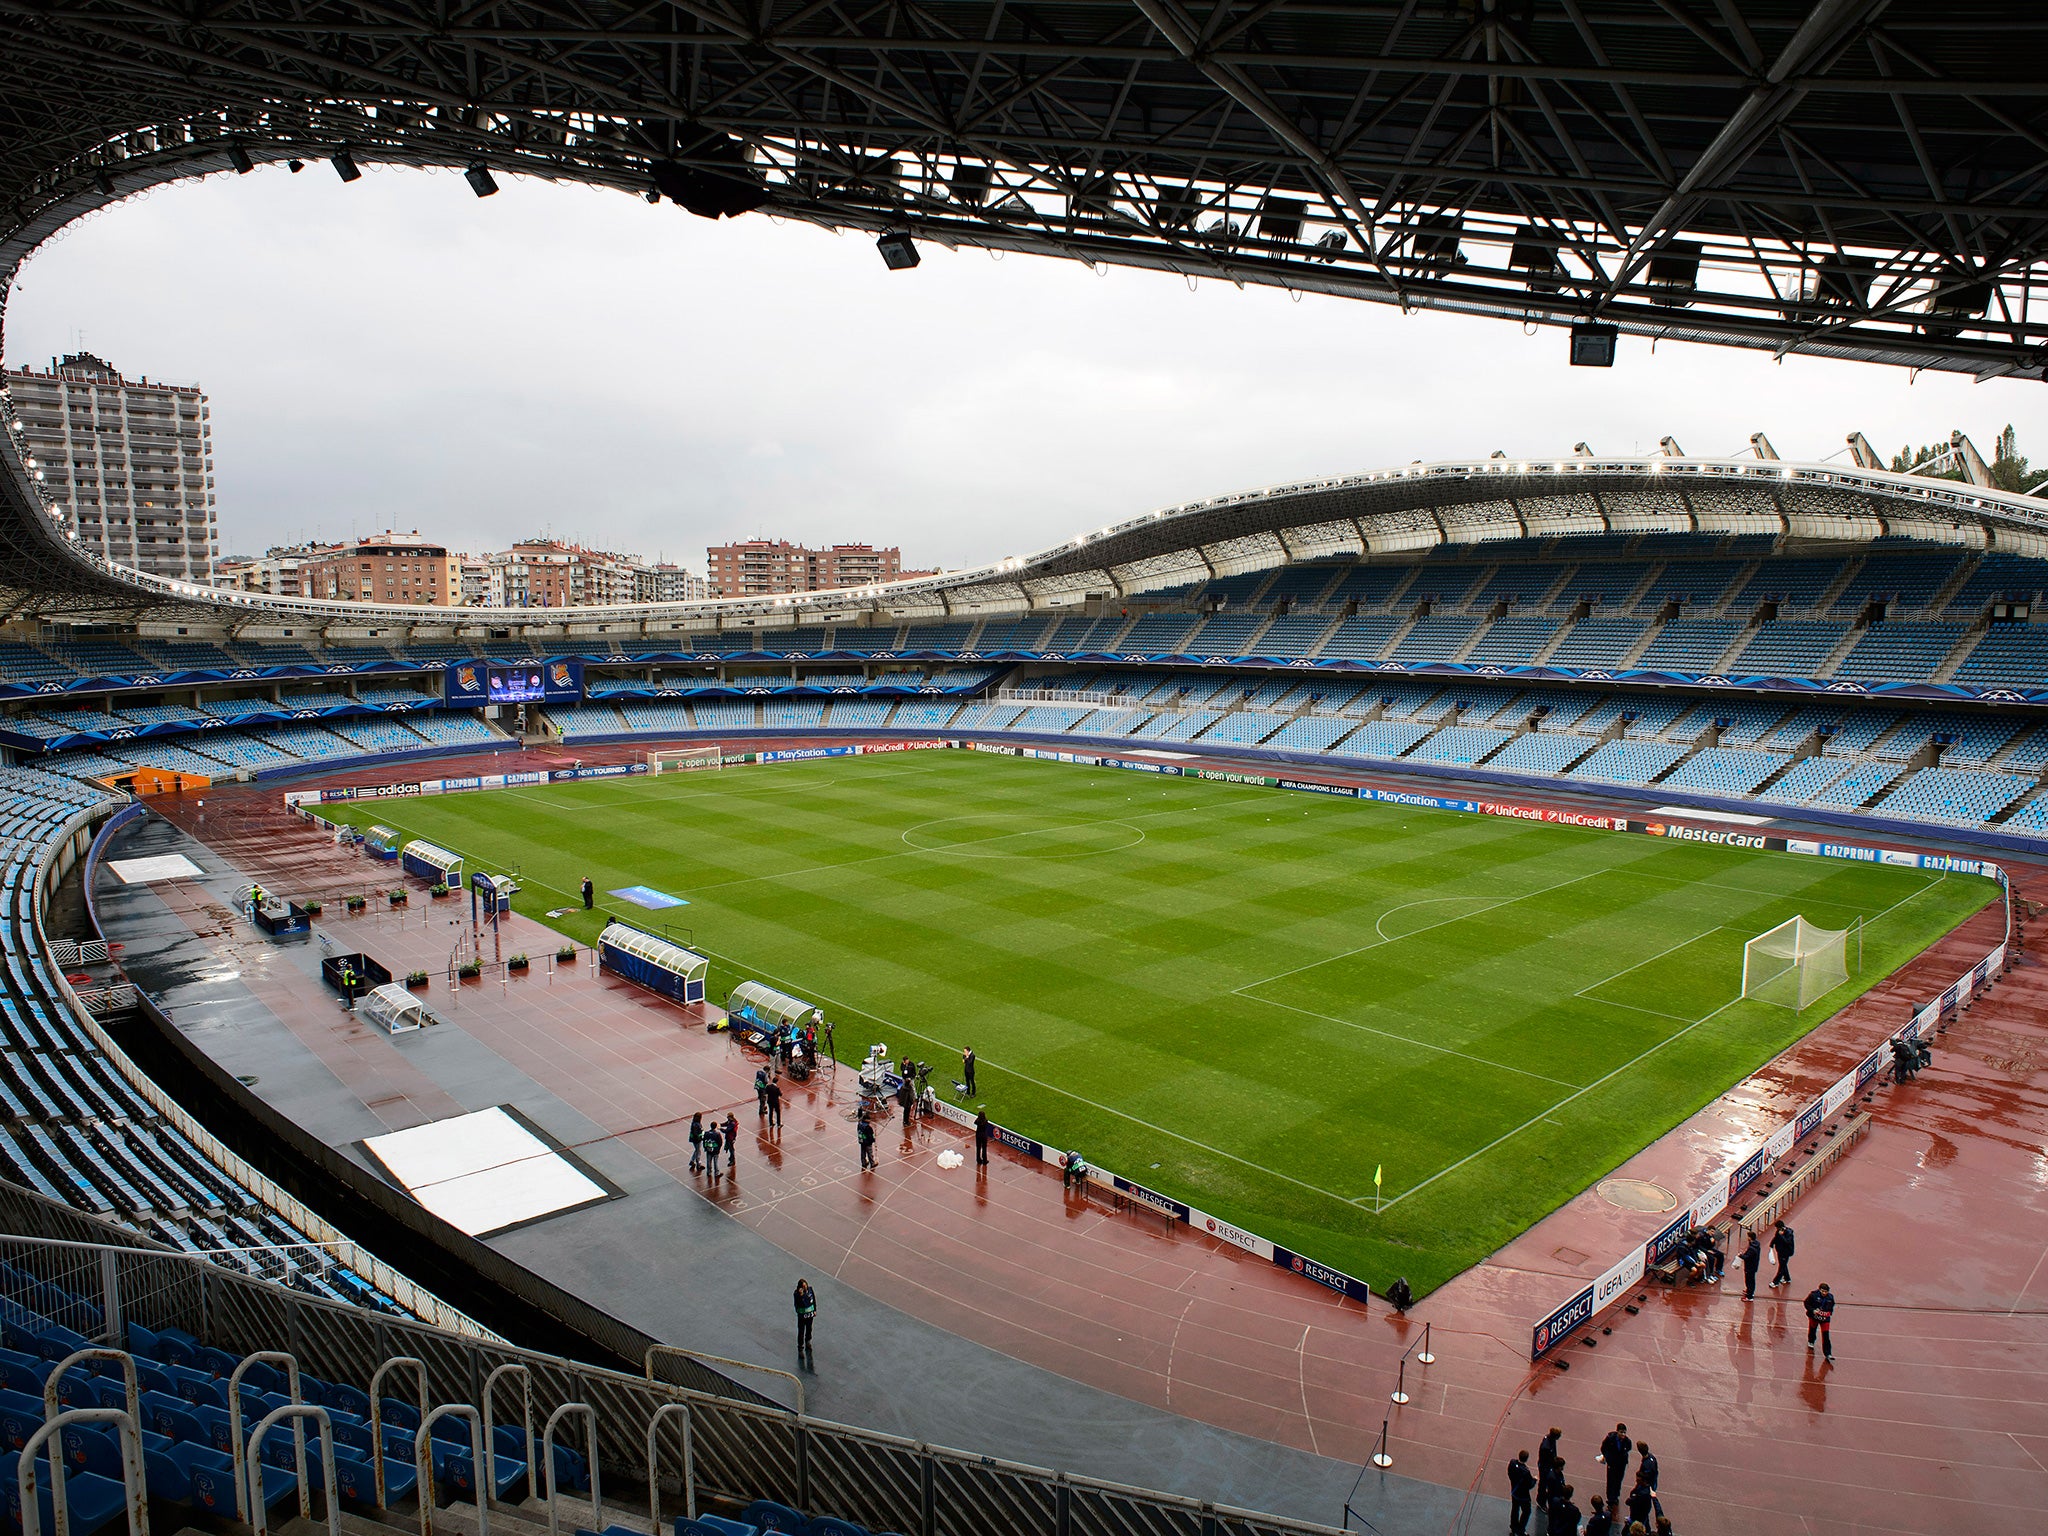 Real Sociedad's home ground, the Anoeta Stadium